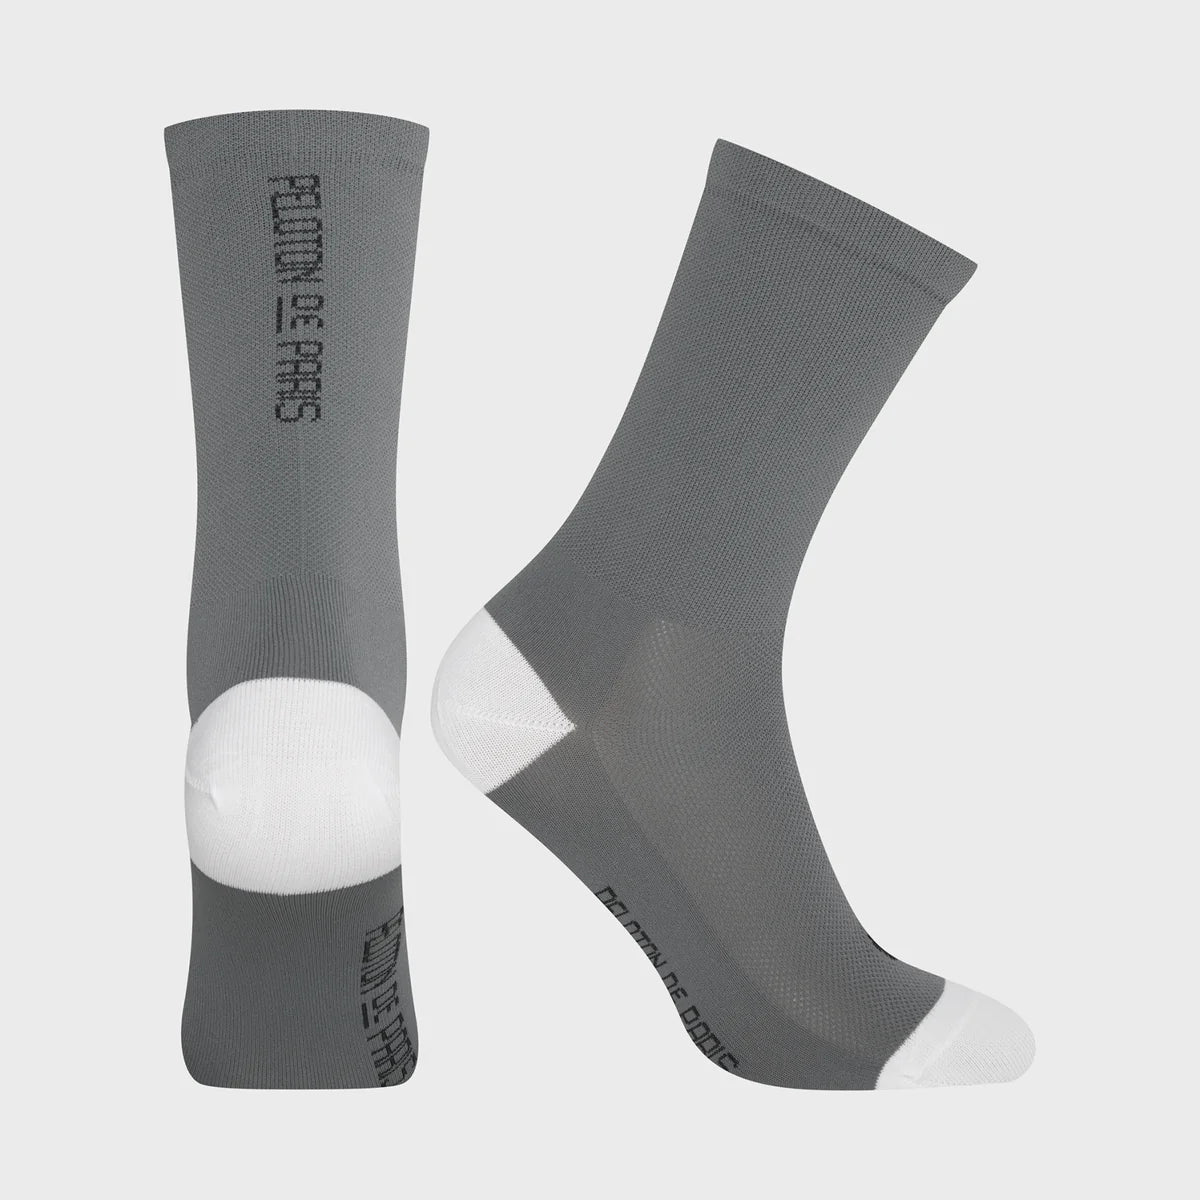 Peloton Cycling Socks - Light Grey